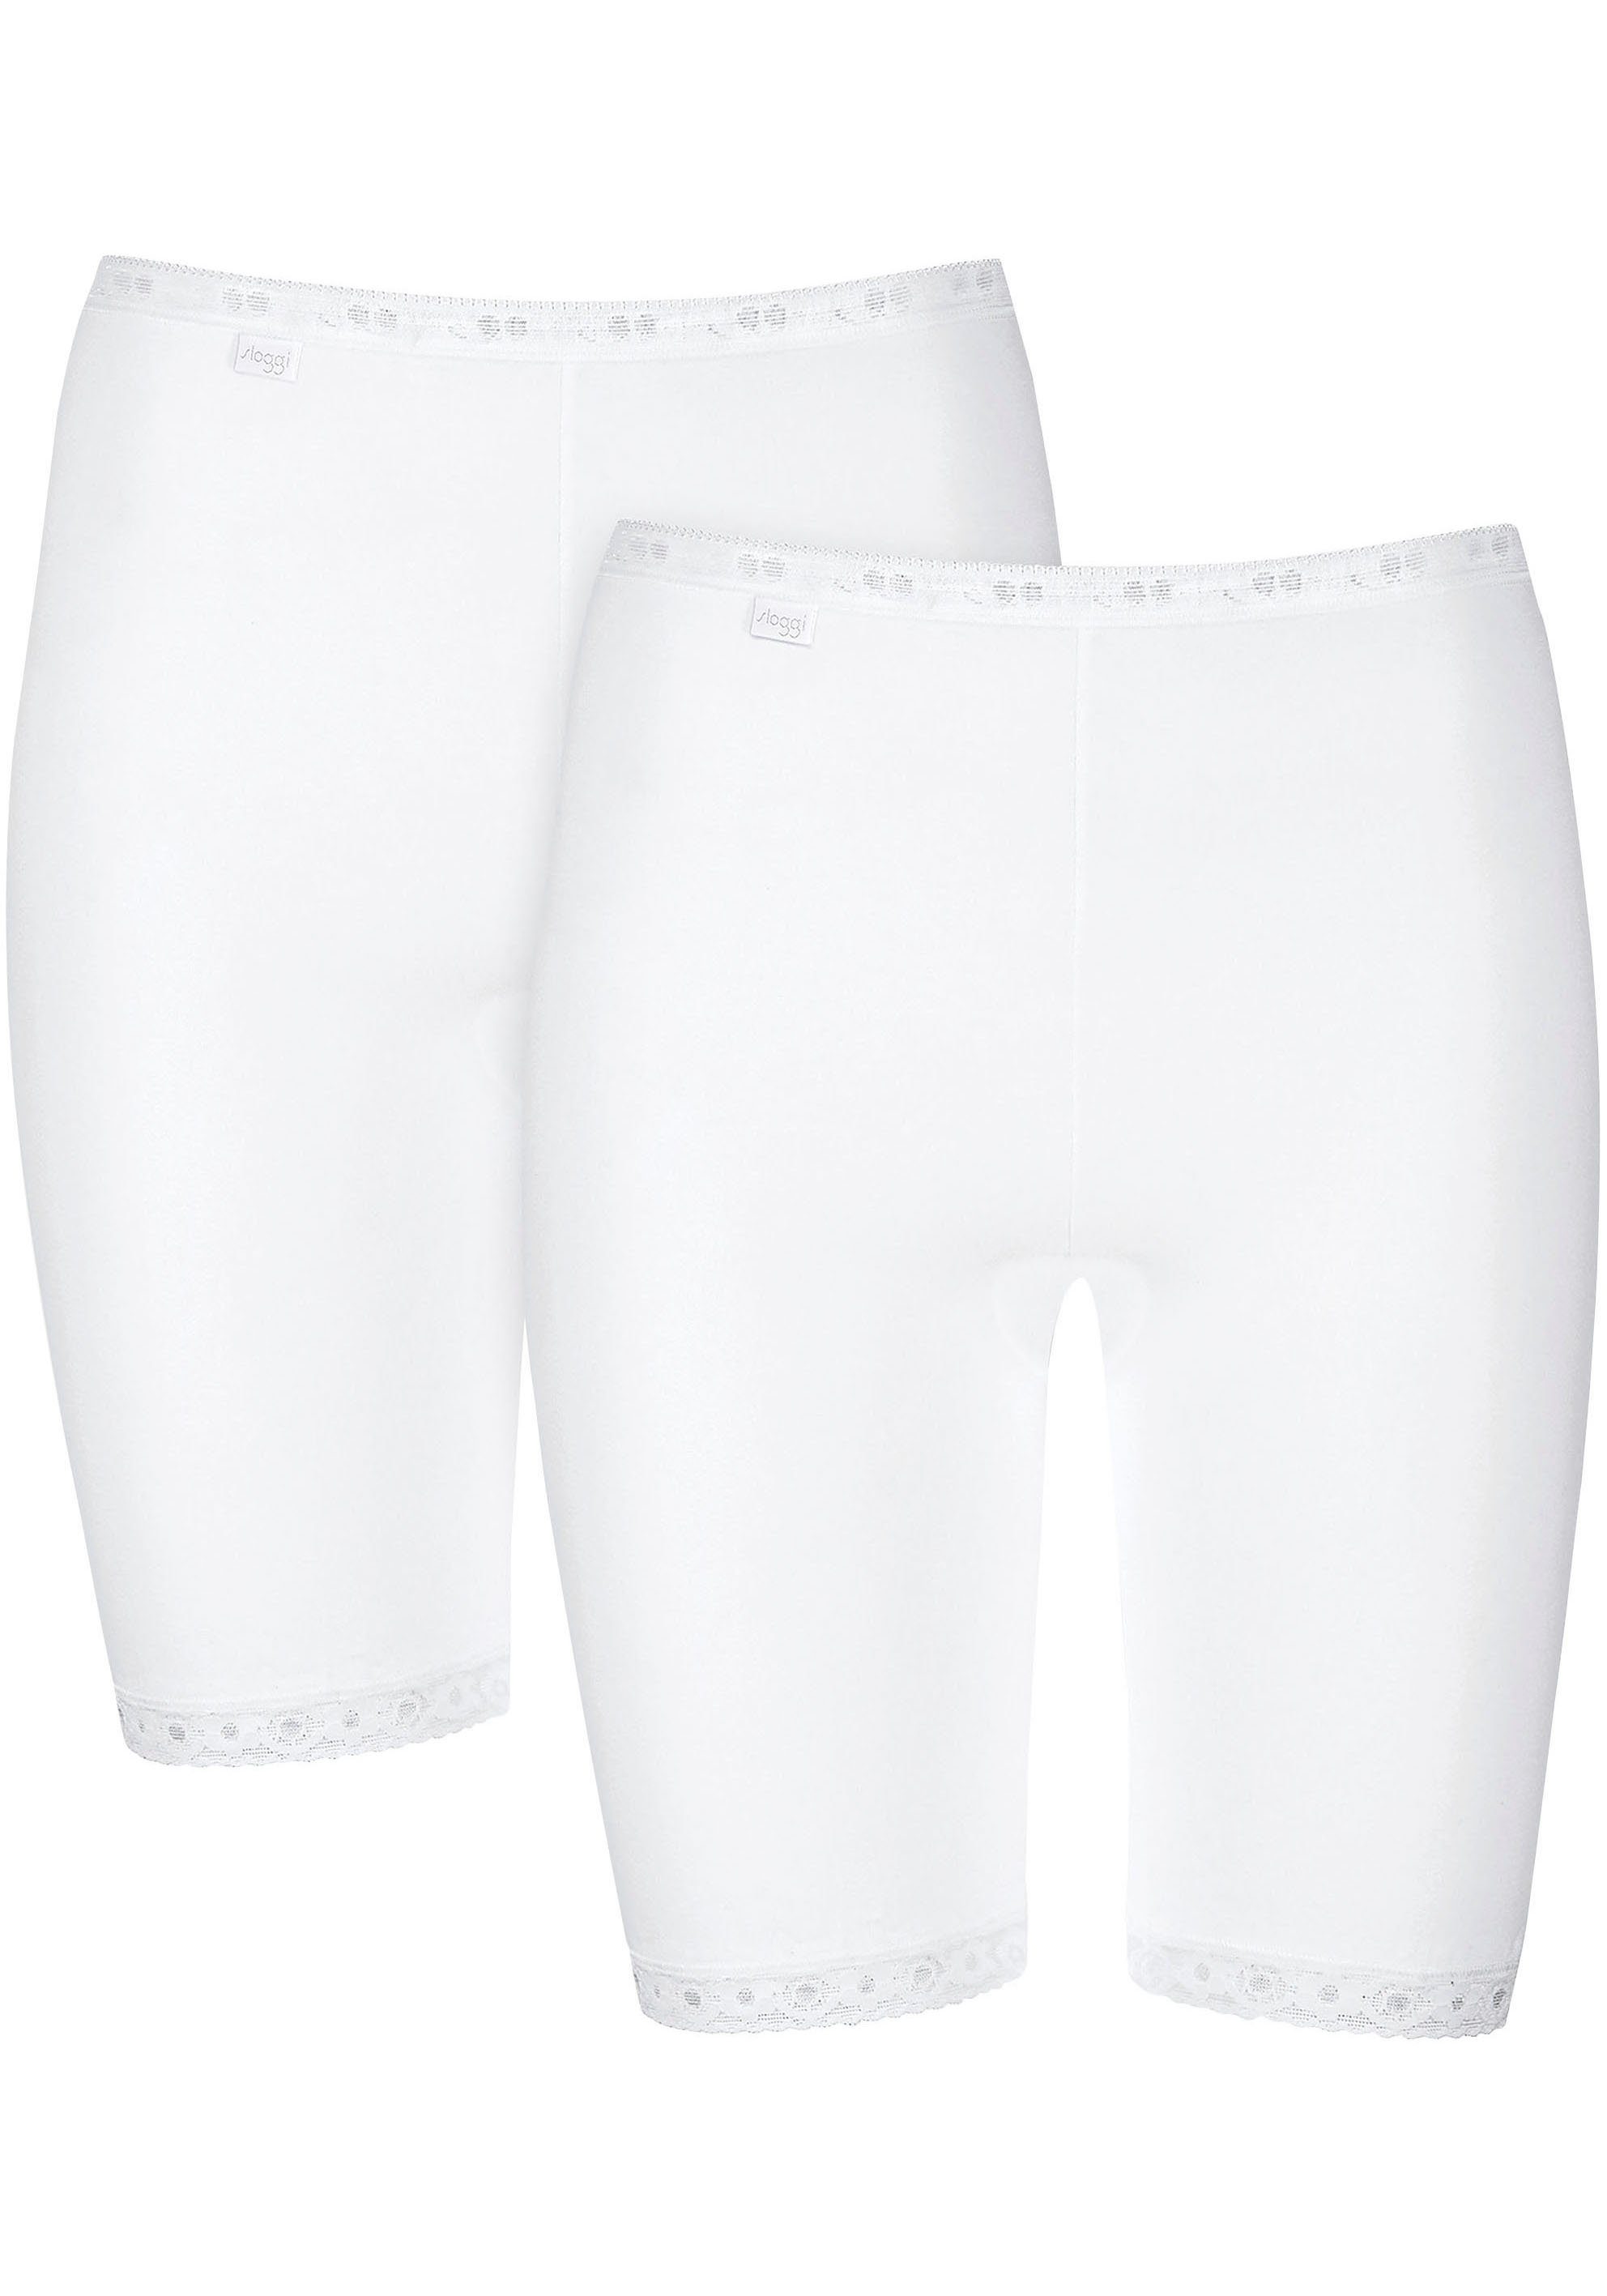 Sloggi Lange Unterhose Basic + (Packung, 2-St) Long-Pants mit Spitzenbesatz WHITE